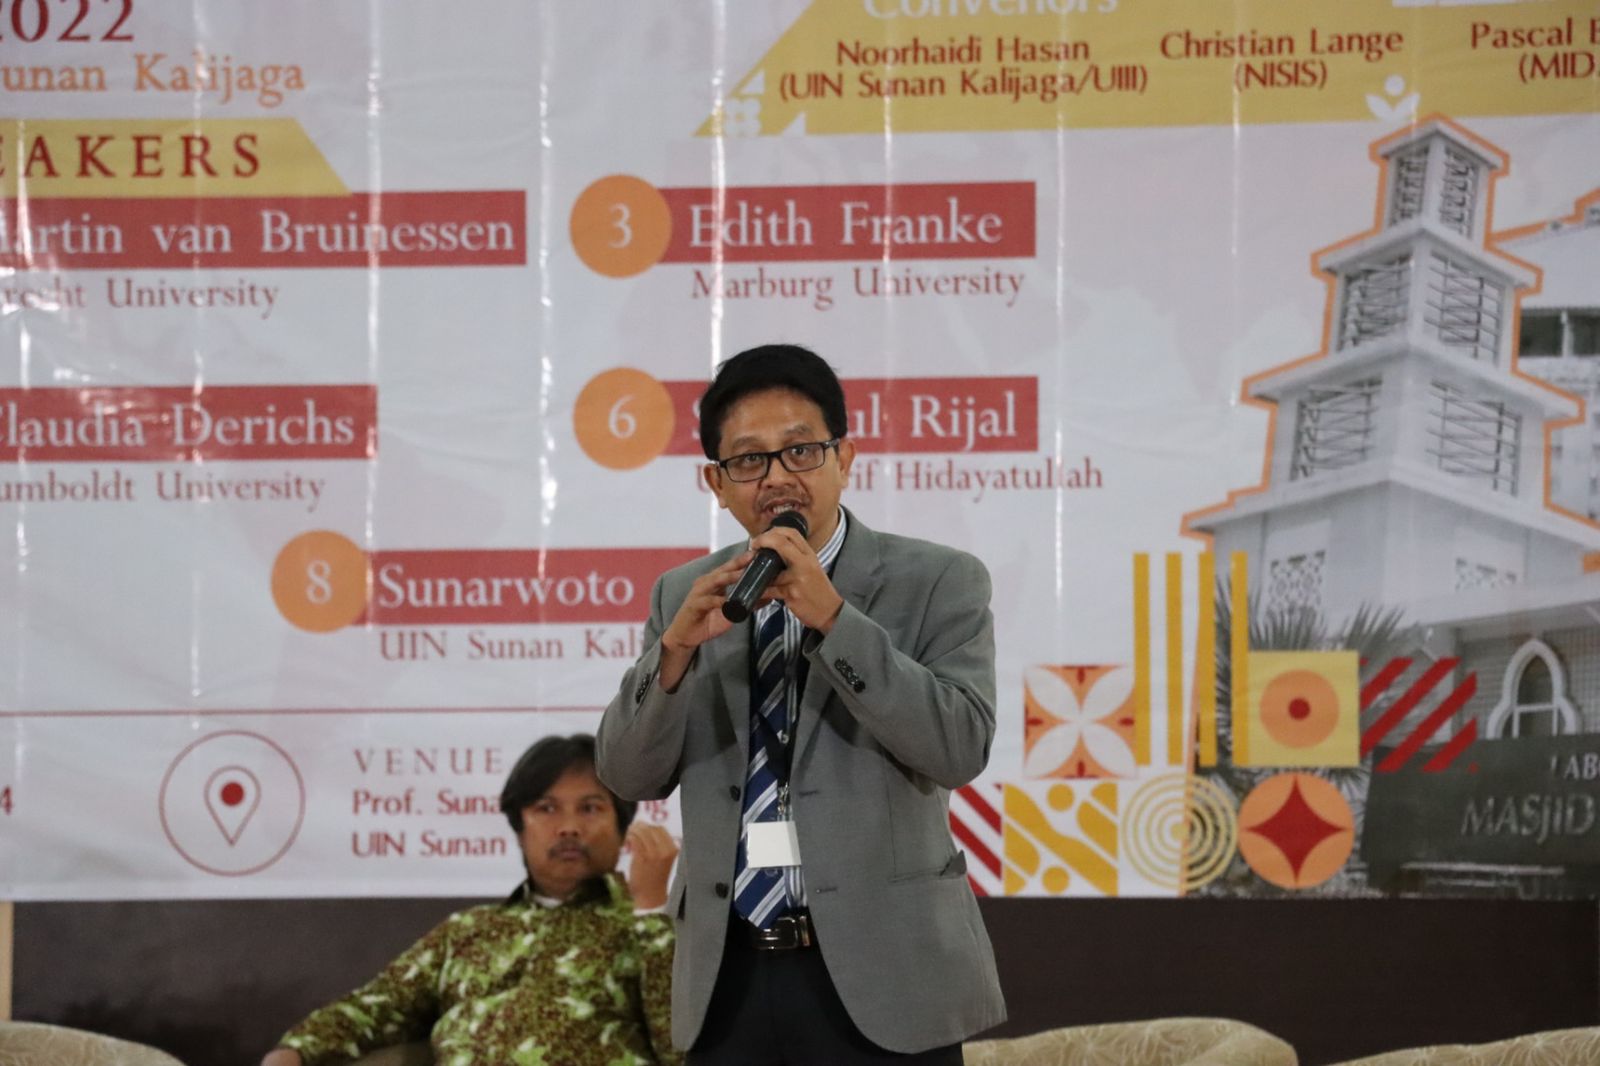 This Week, UIII Jointly Organizes Its First Summer School in Yogyakarta